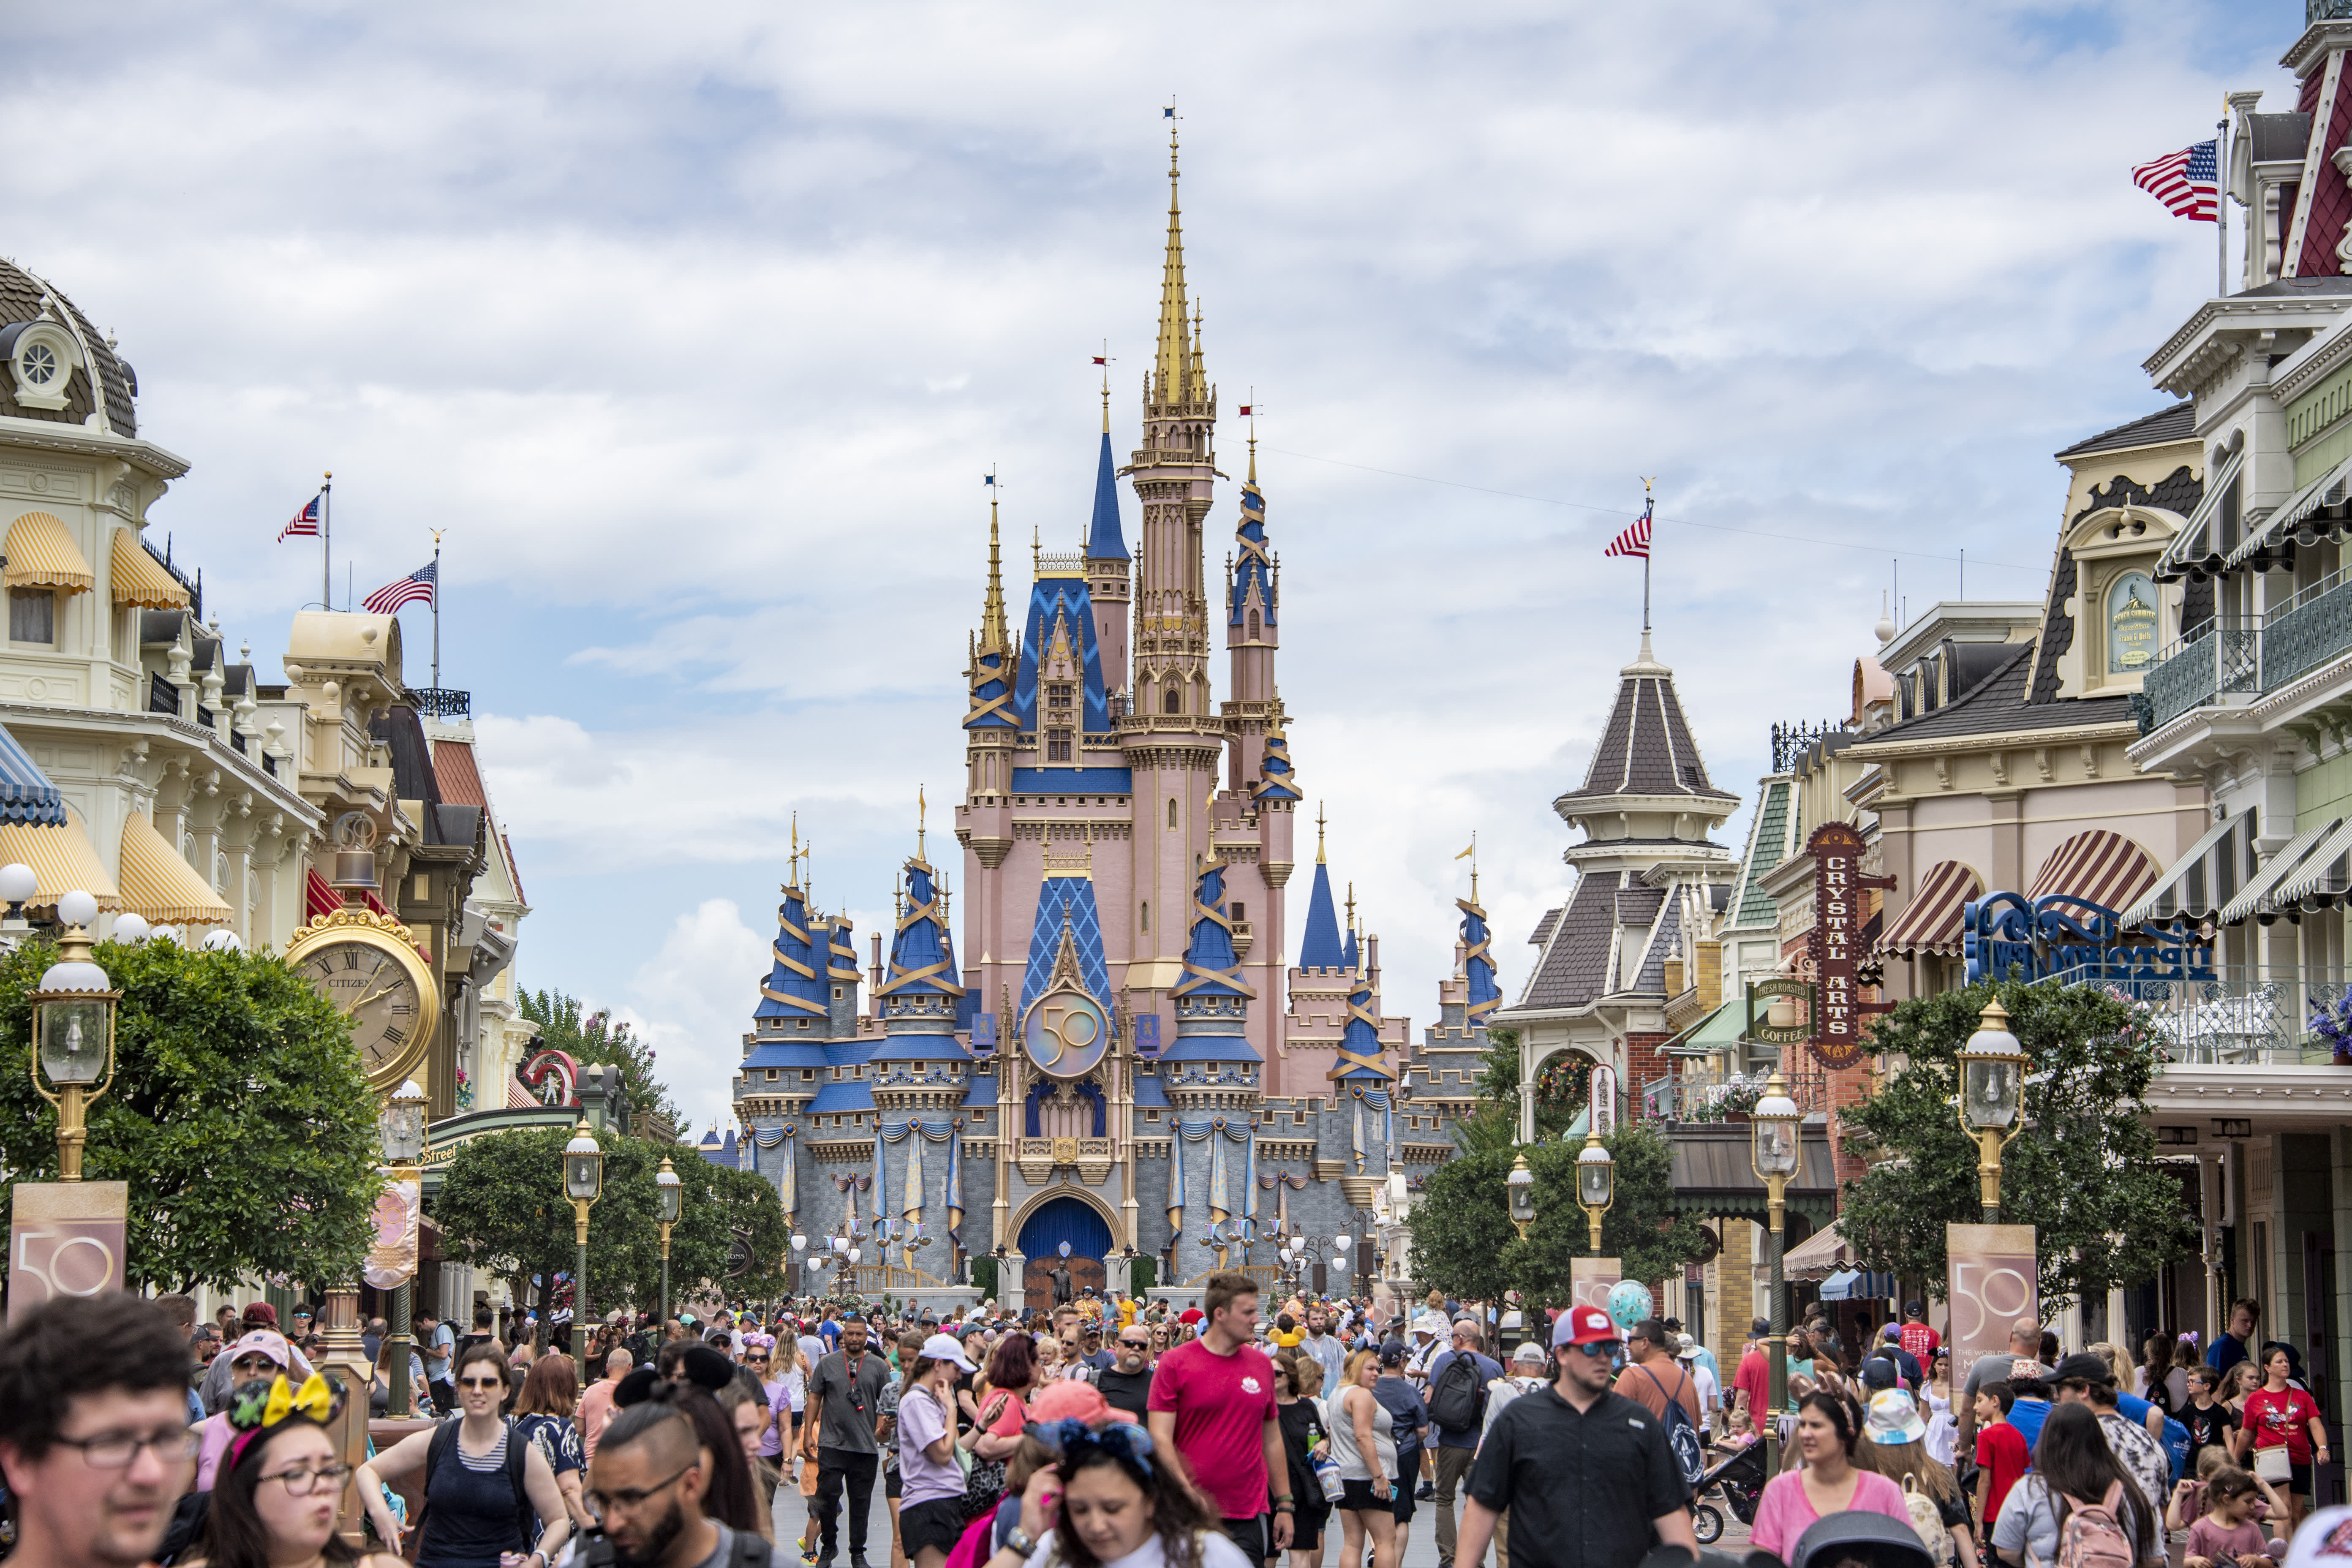 8 Ways to Save on Walt Disney World Souvenirs 